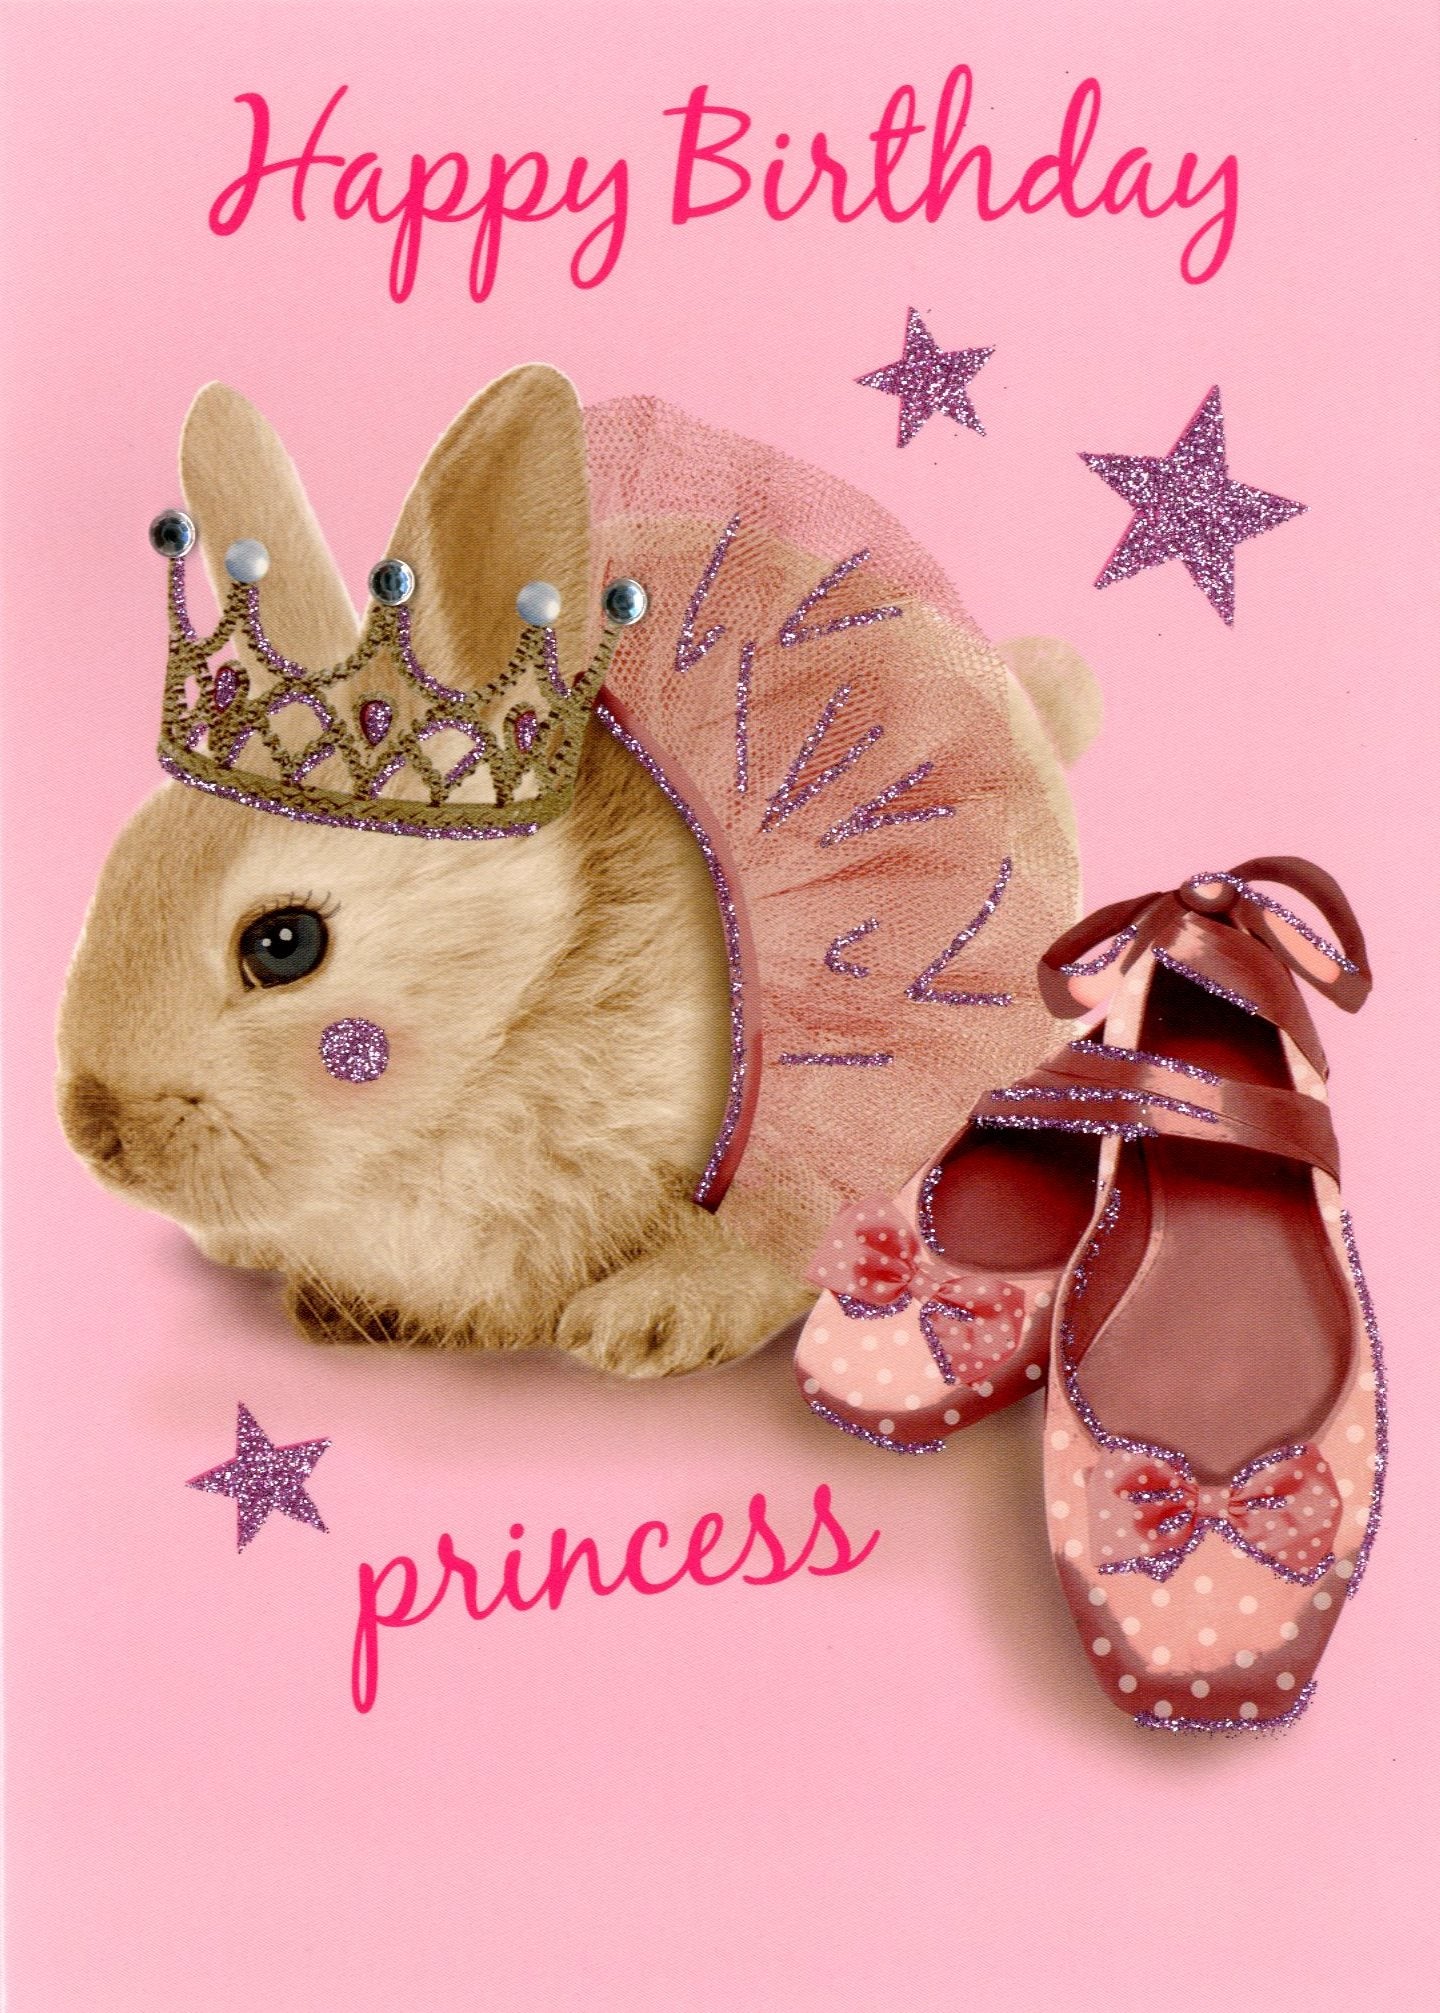 Happy Birthday Princess Birthday Greeting Card